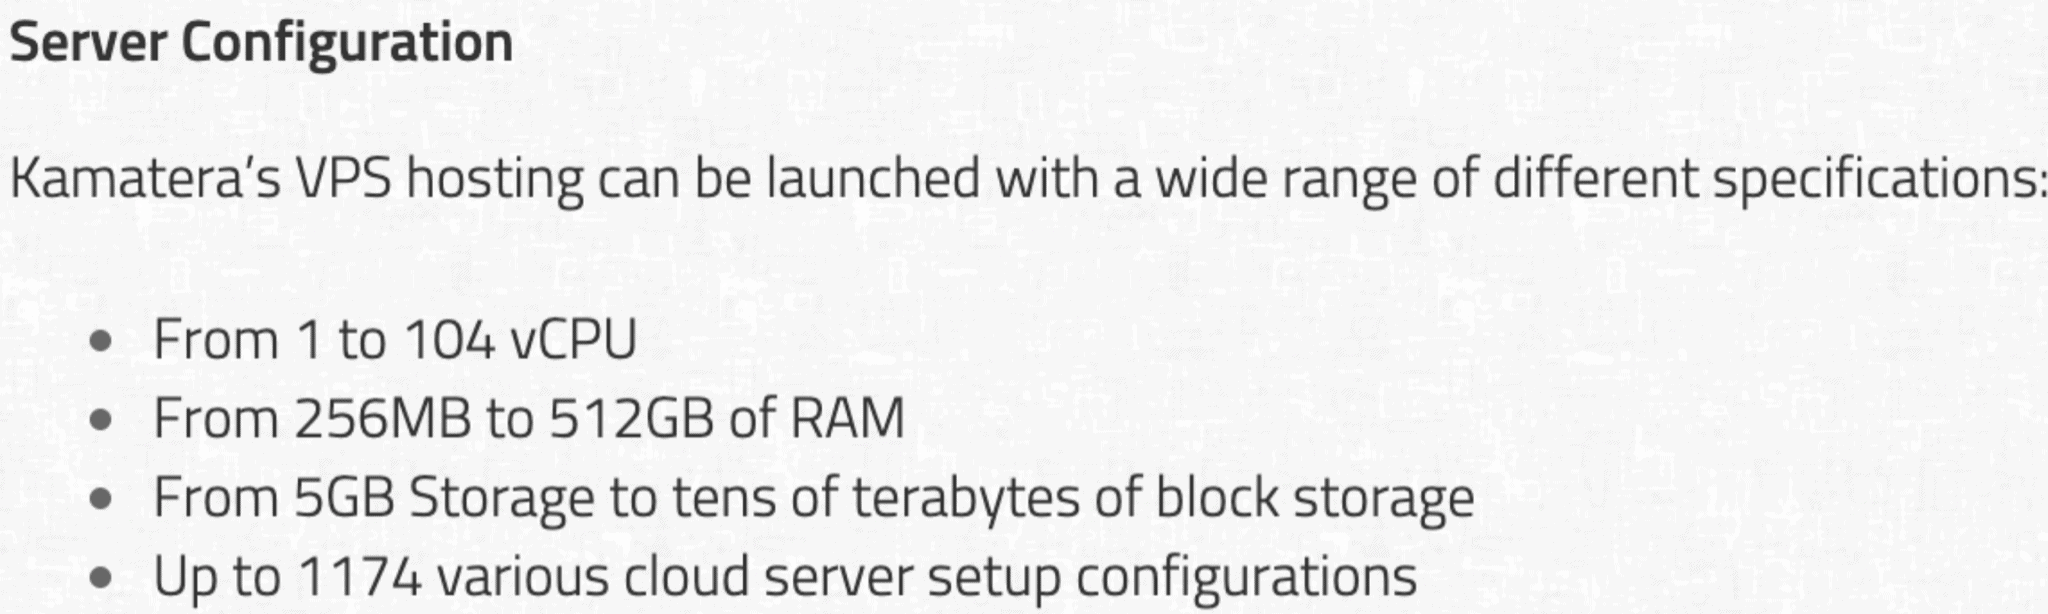 Server configuration details from Kamatera's website